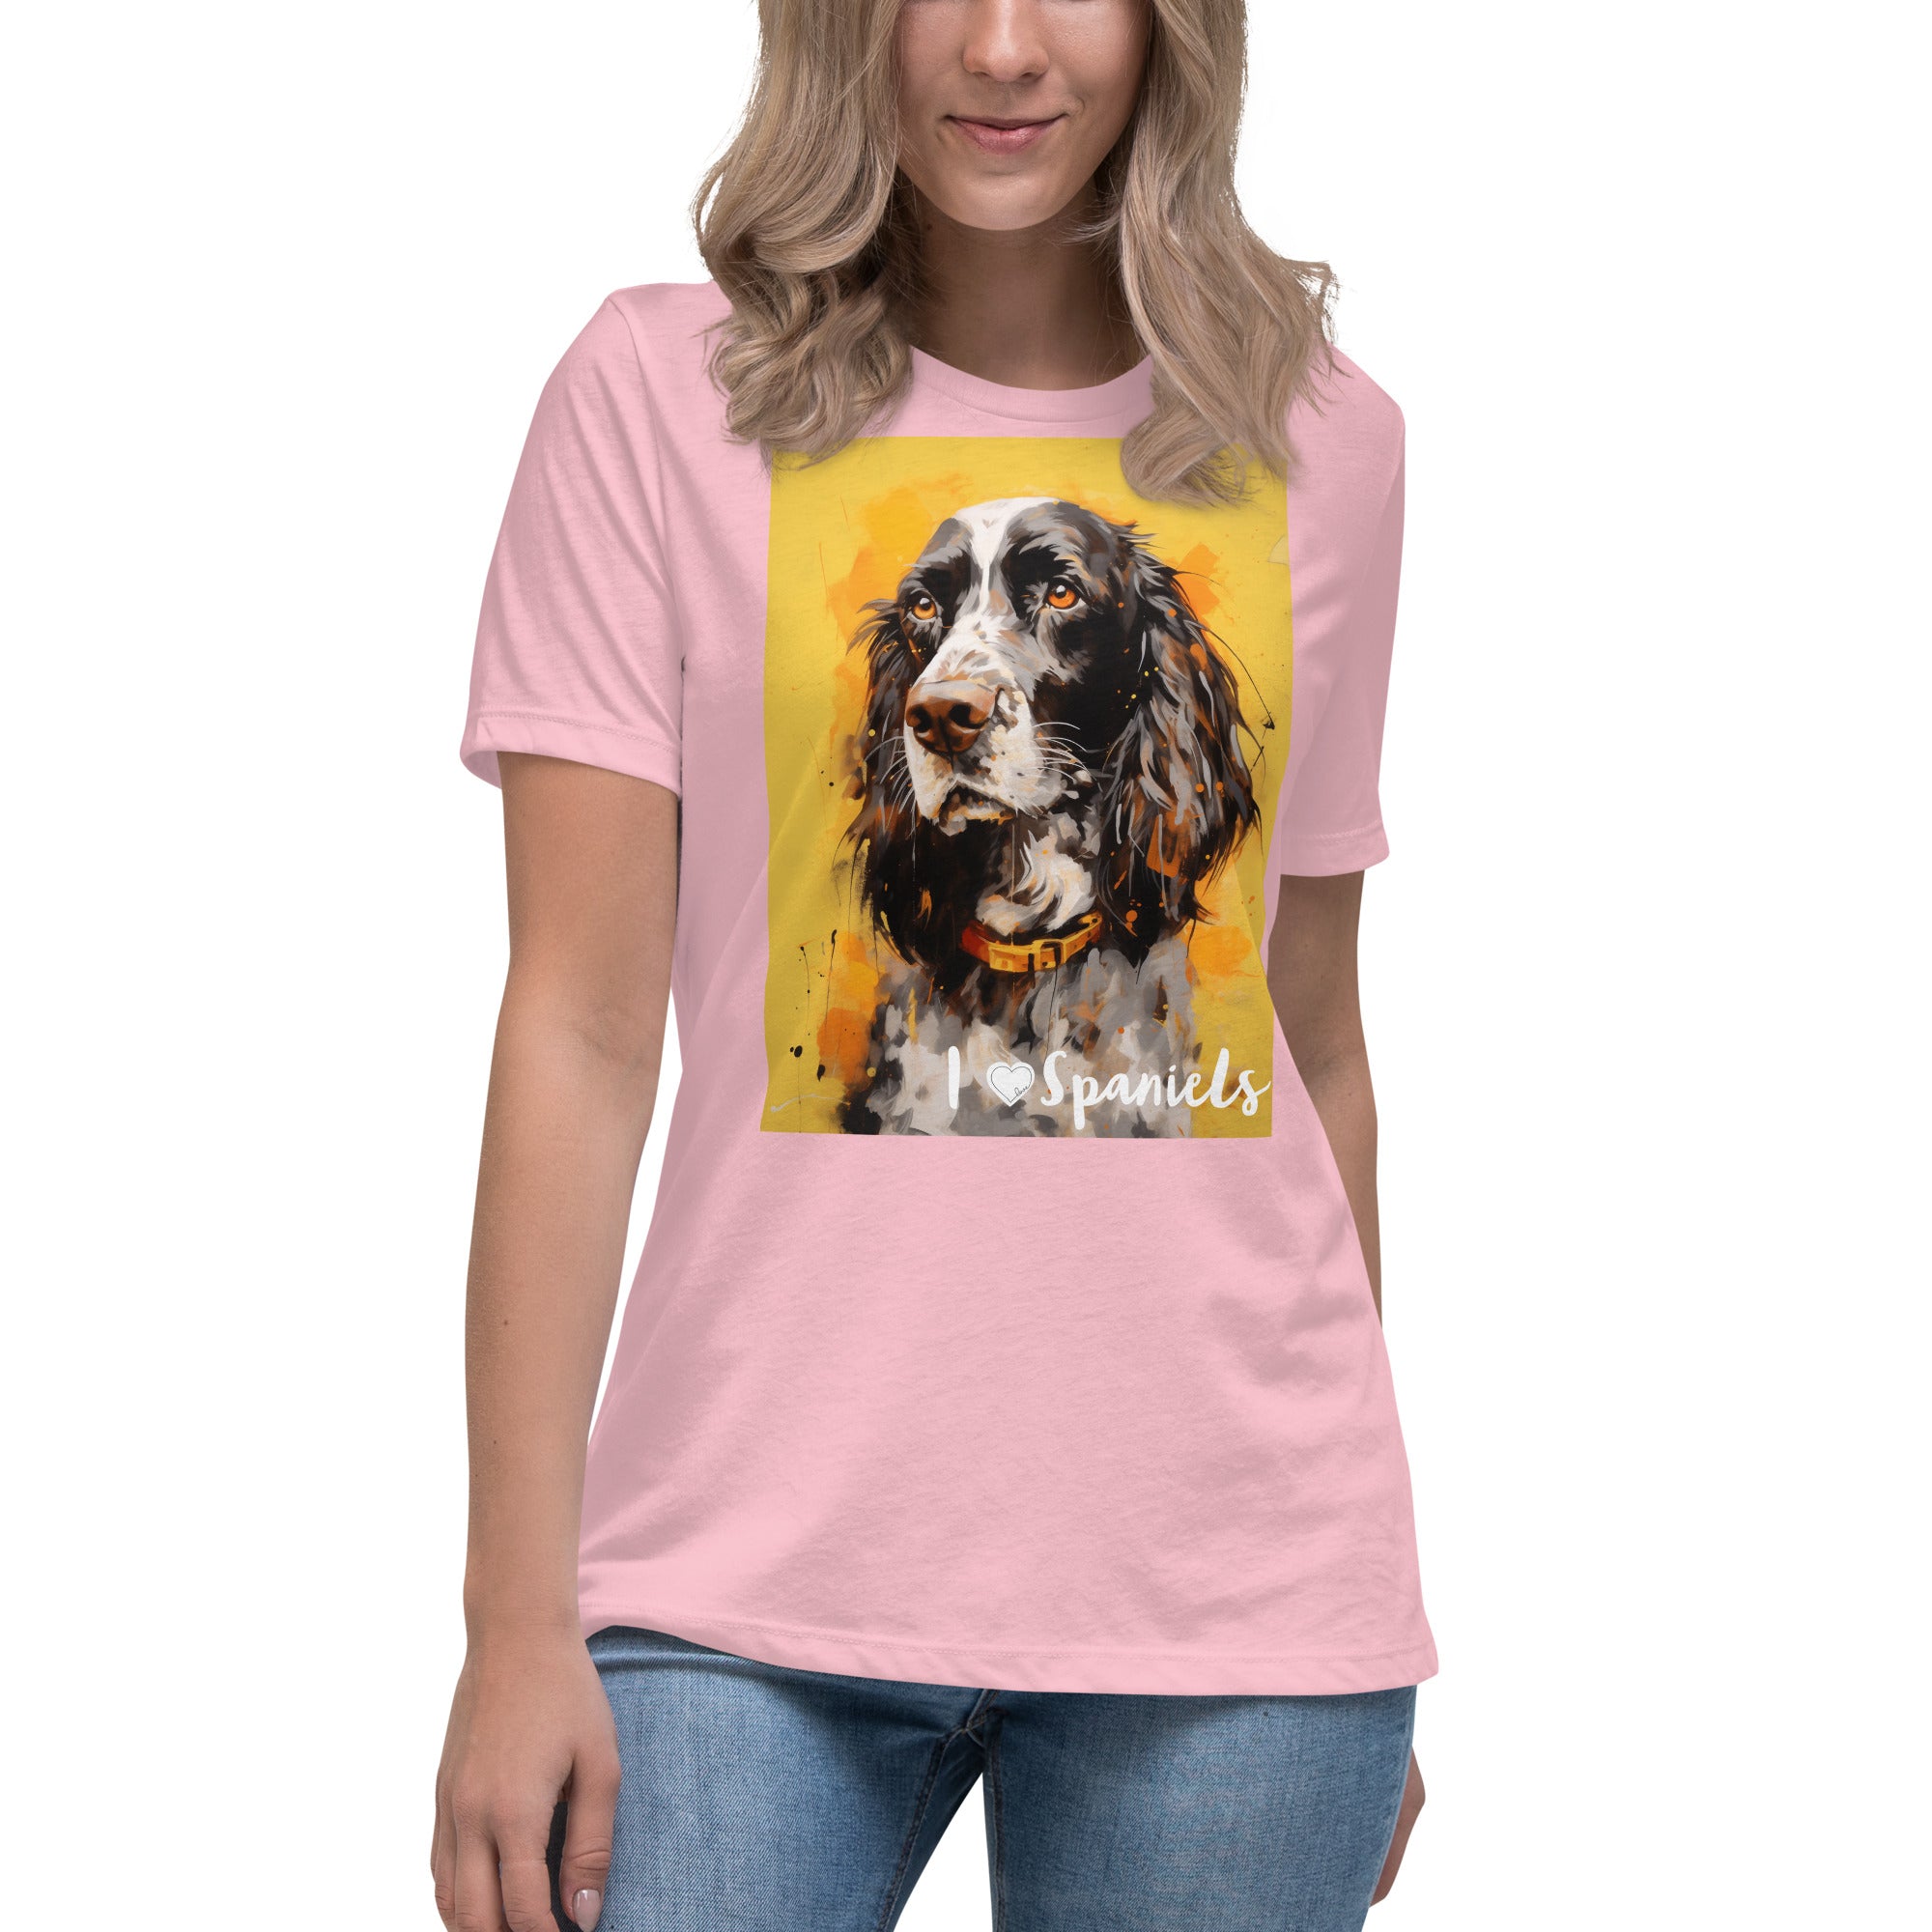 Women's Relaxed T-Shirt - I ❤ Dogs - Cocker Spaniel (American)